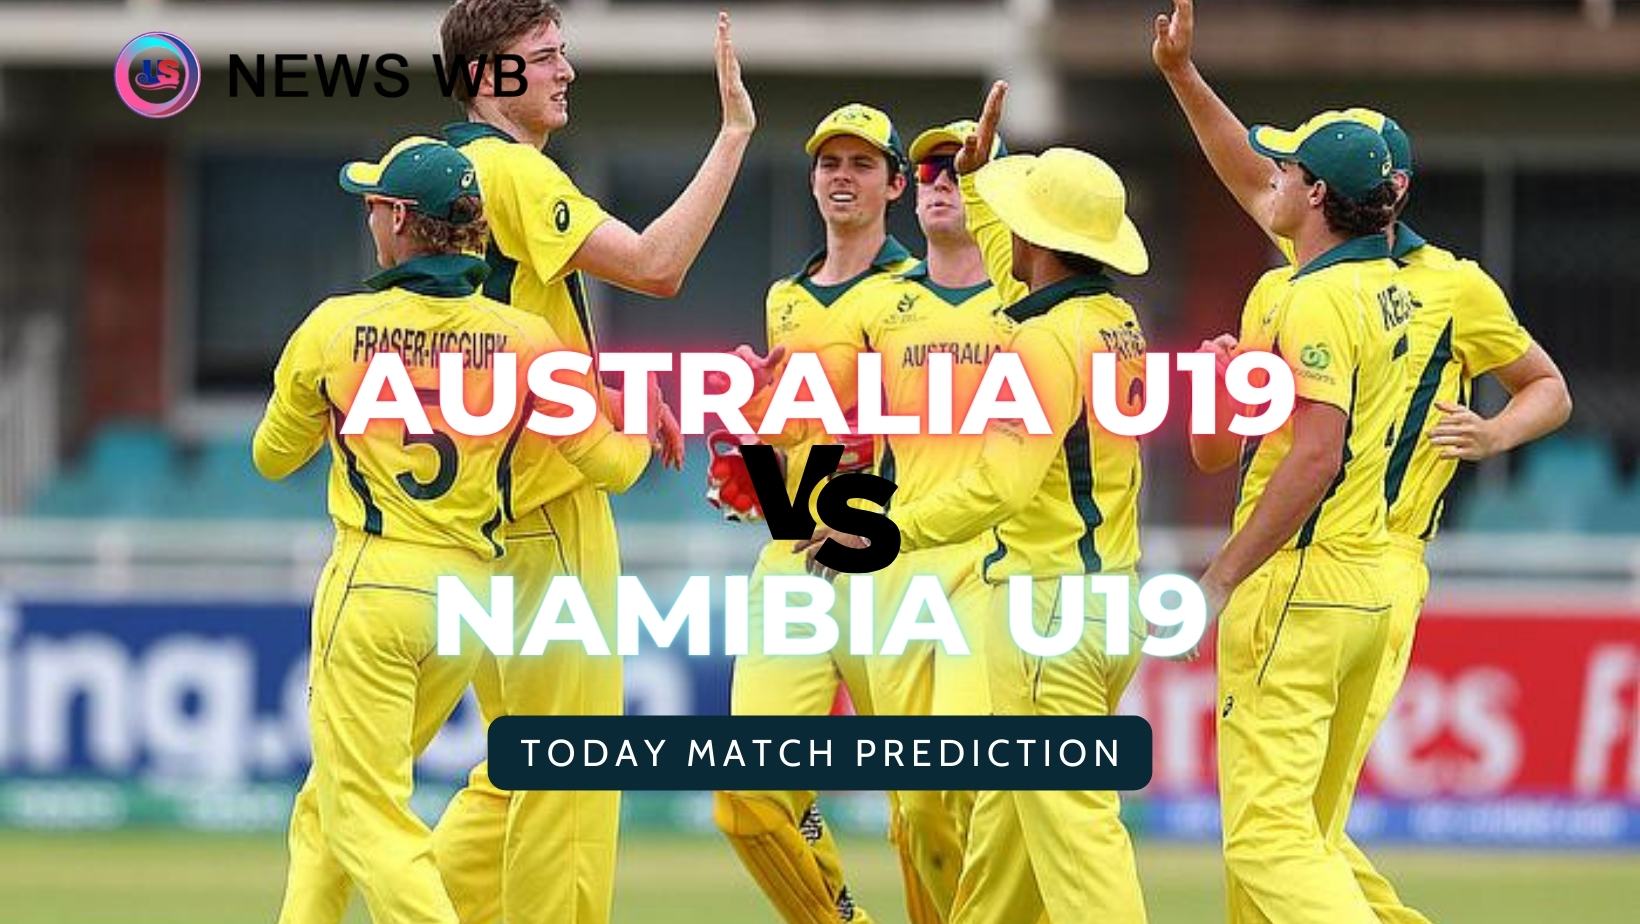 Today Match Prediction: AUS U19 vs NAM U19 Dream11 Team, Australia U19 vs Namibia U19 9th Match, Group B, Who Will Win?